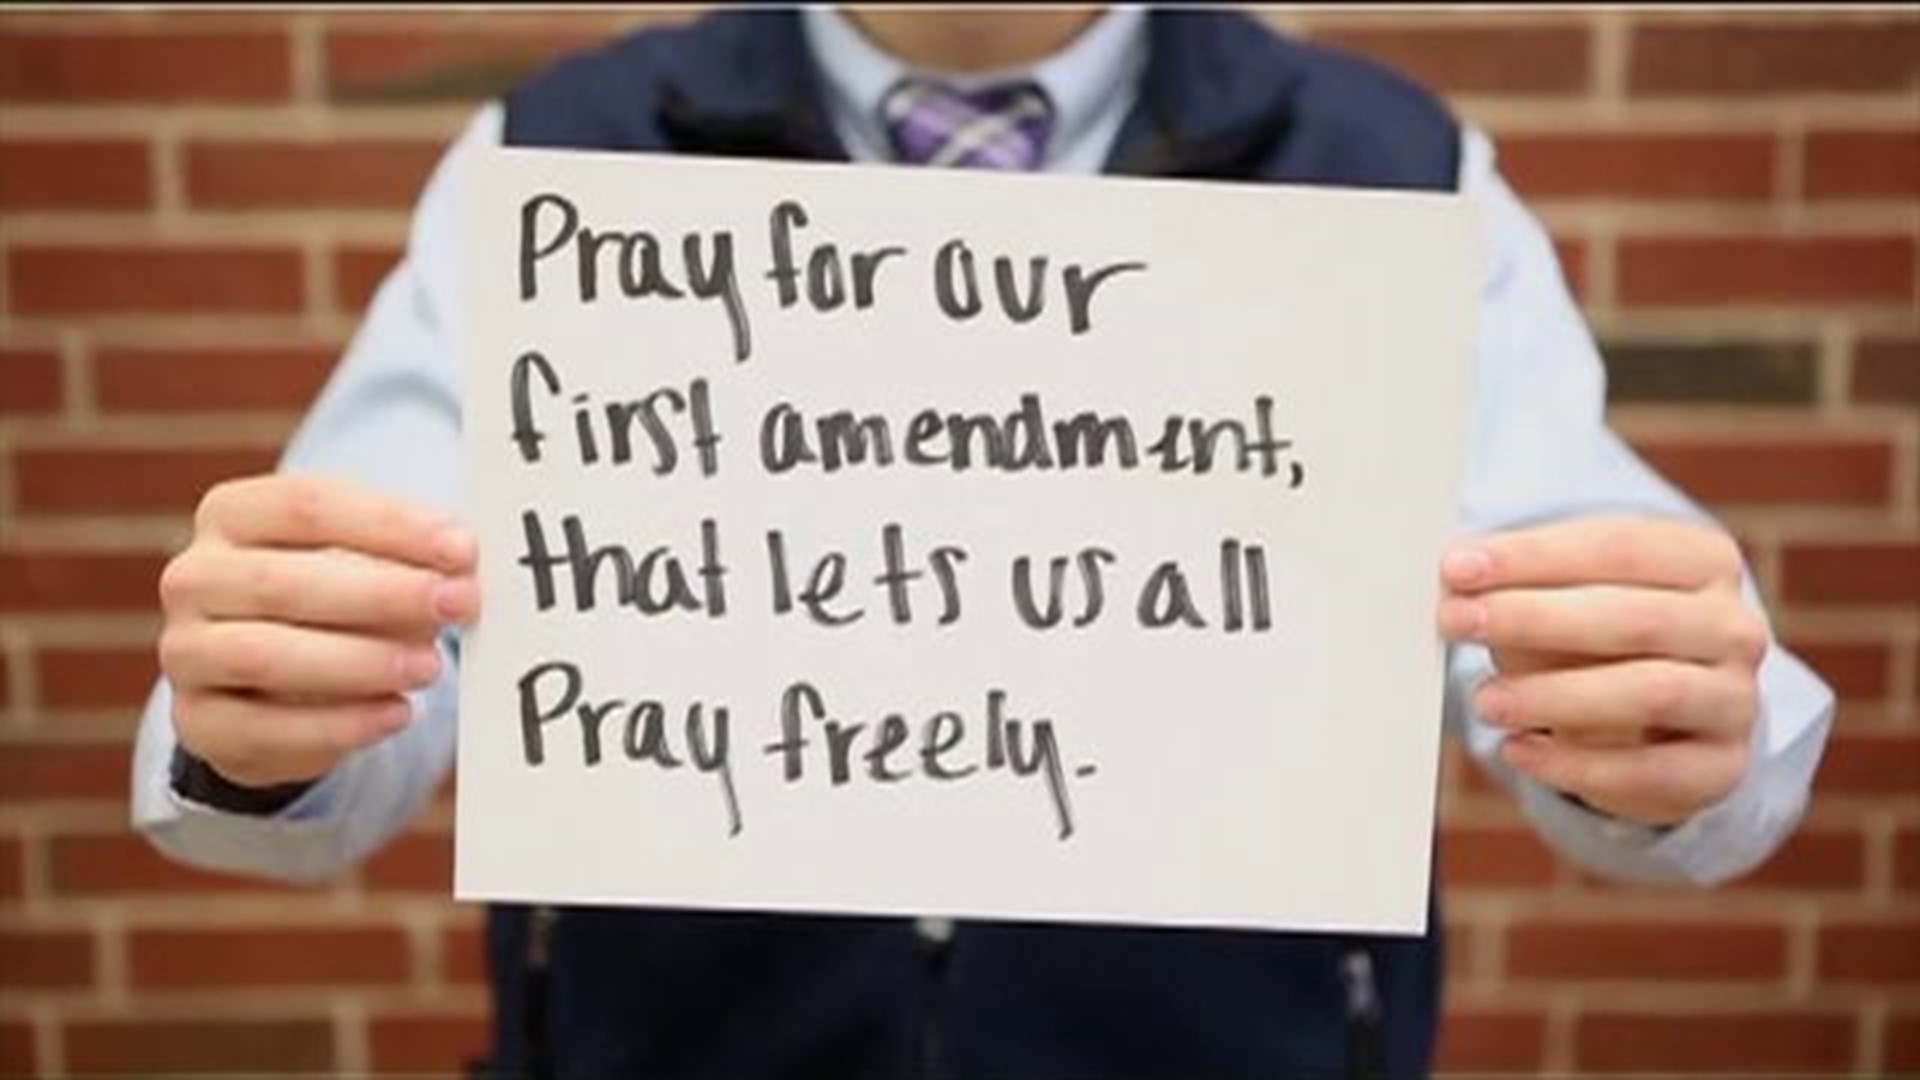 East Catholic High School speaks out on prayer shaming